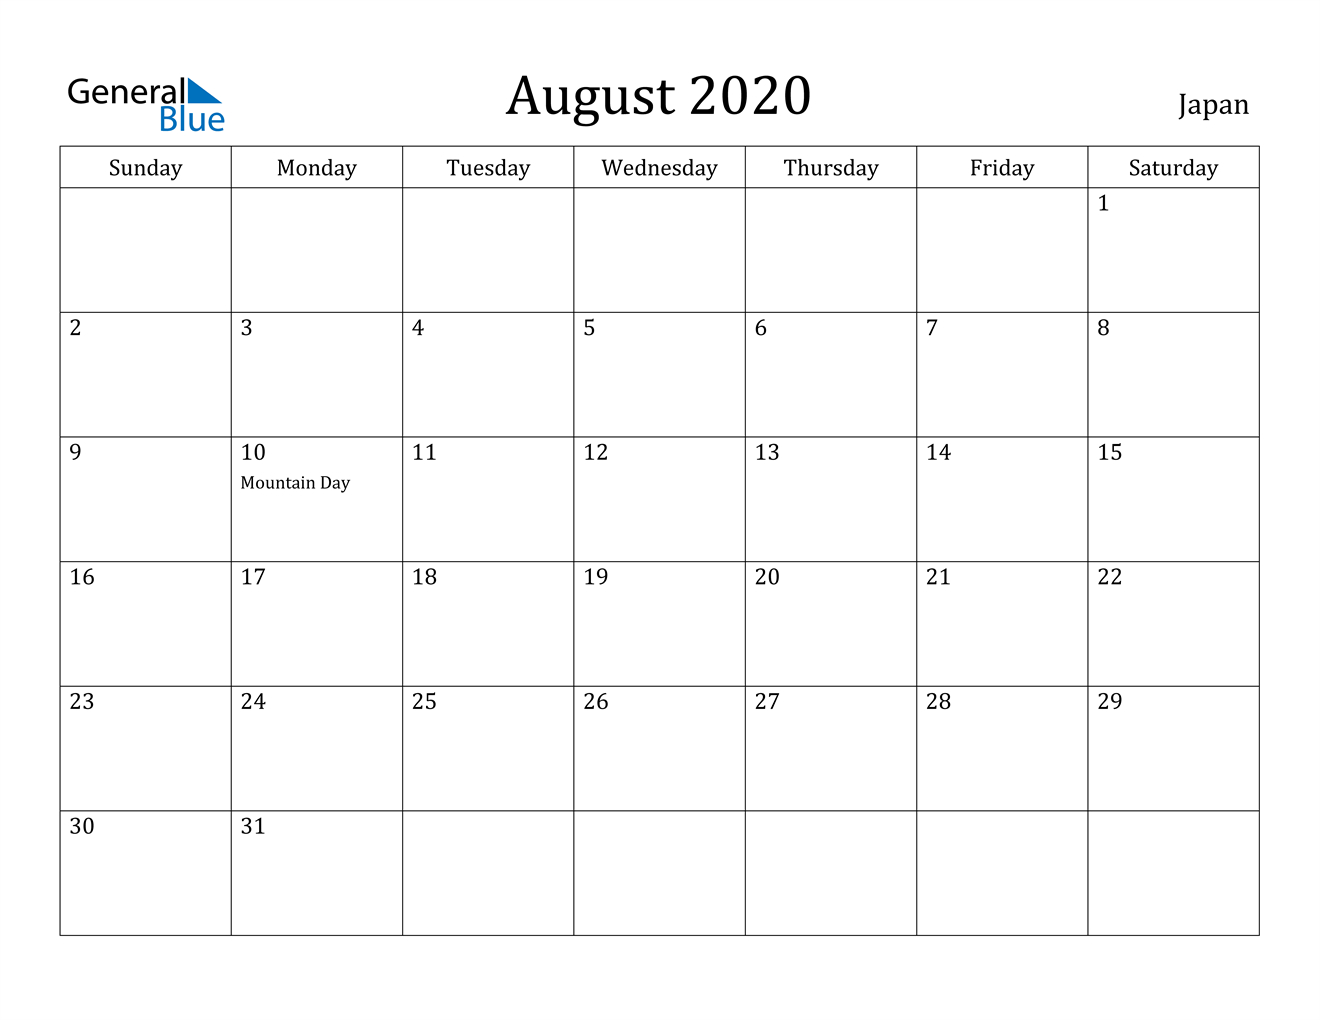 August 2020 Calendar - Japan